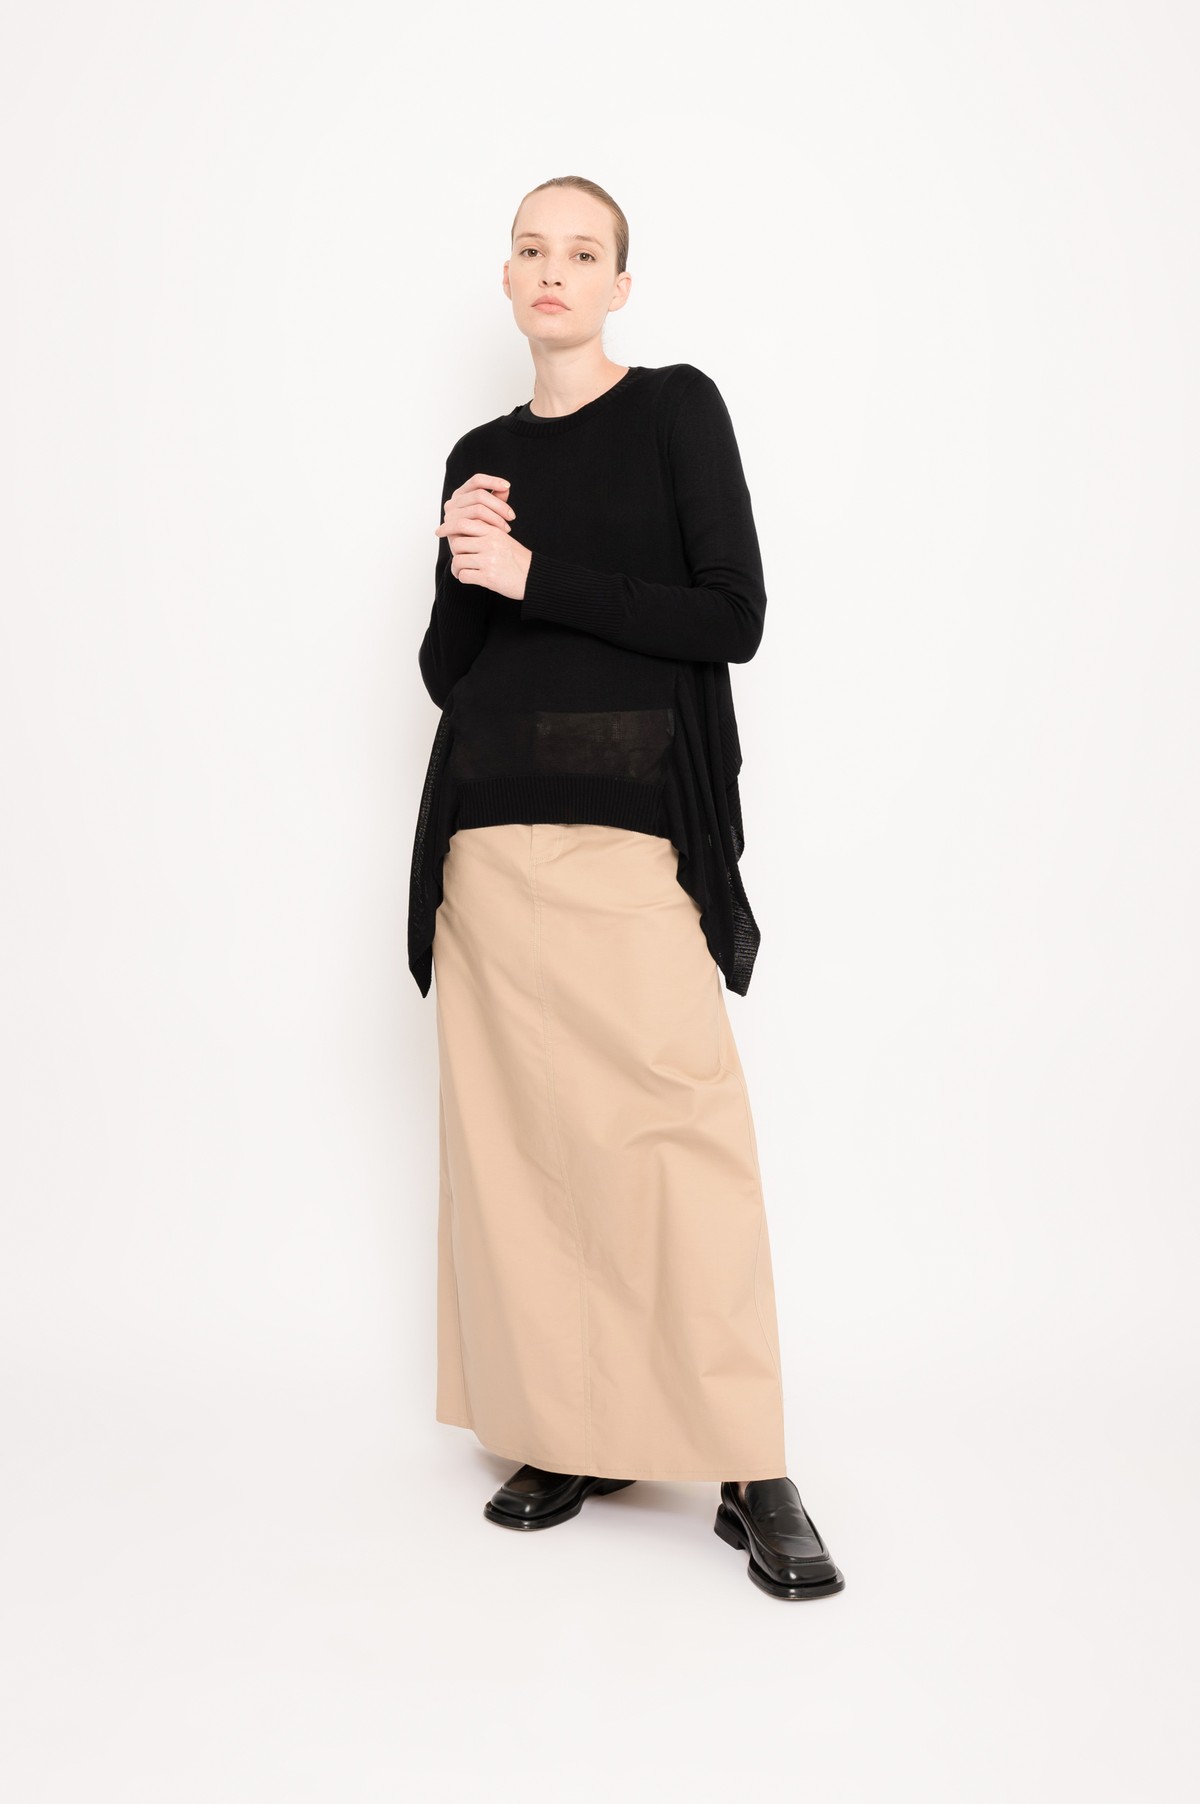 tricot manga longa com barra assimétrica | asymmetric knit sweater